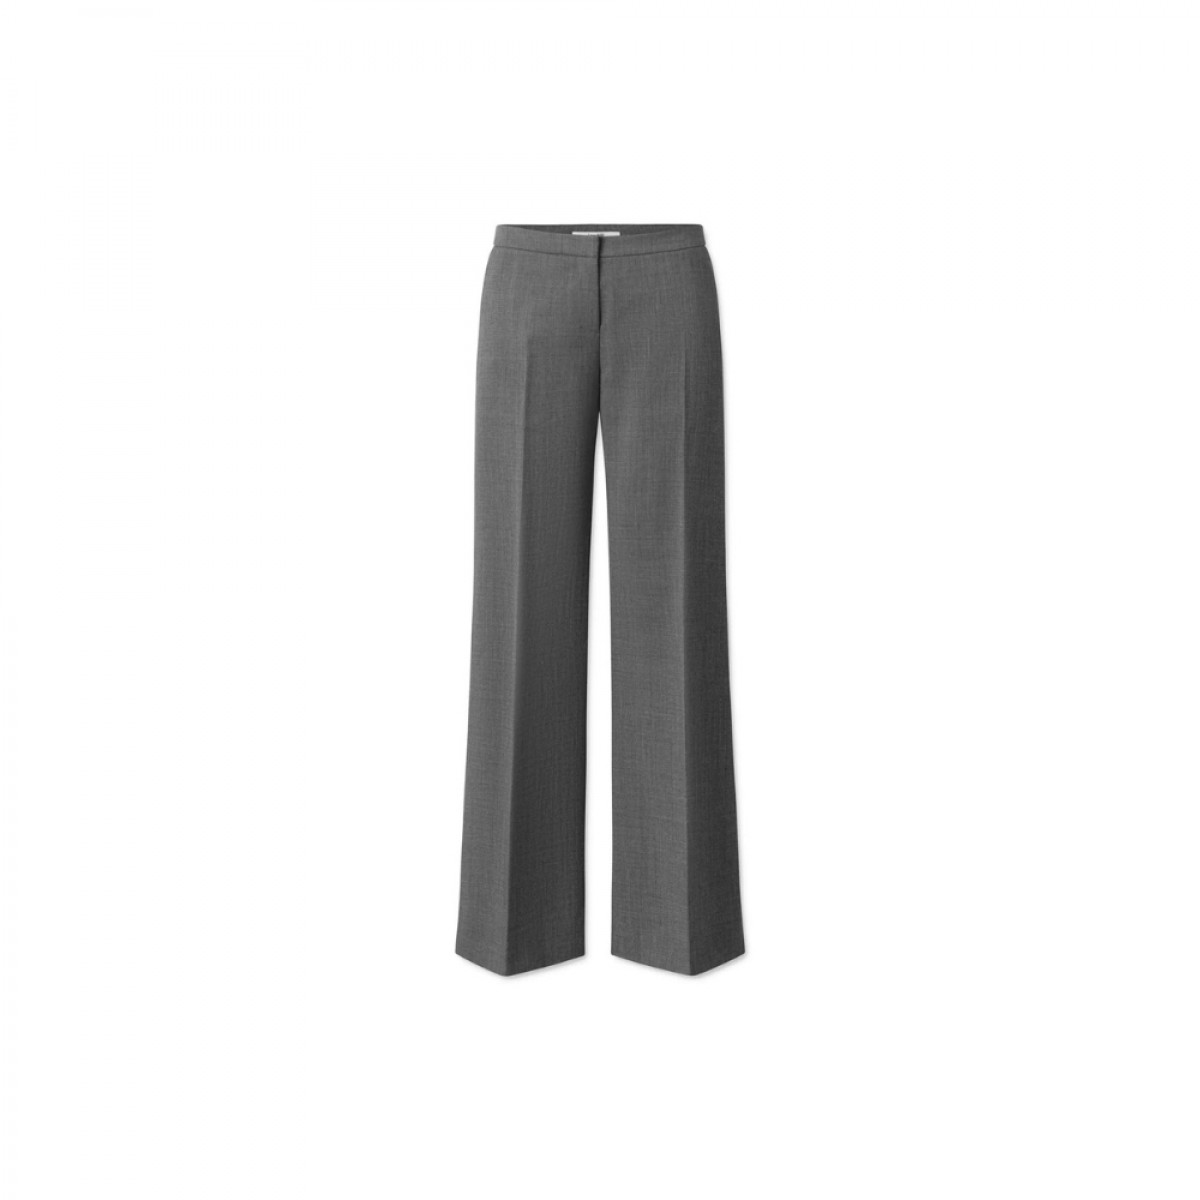 lea pants - grey melange - front